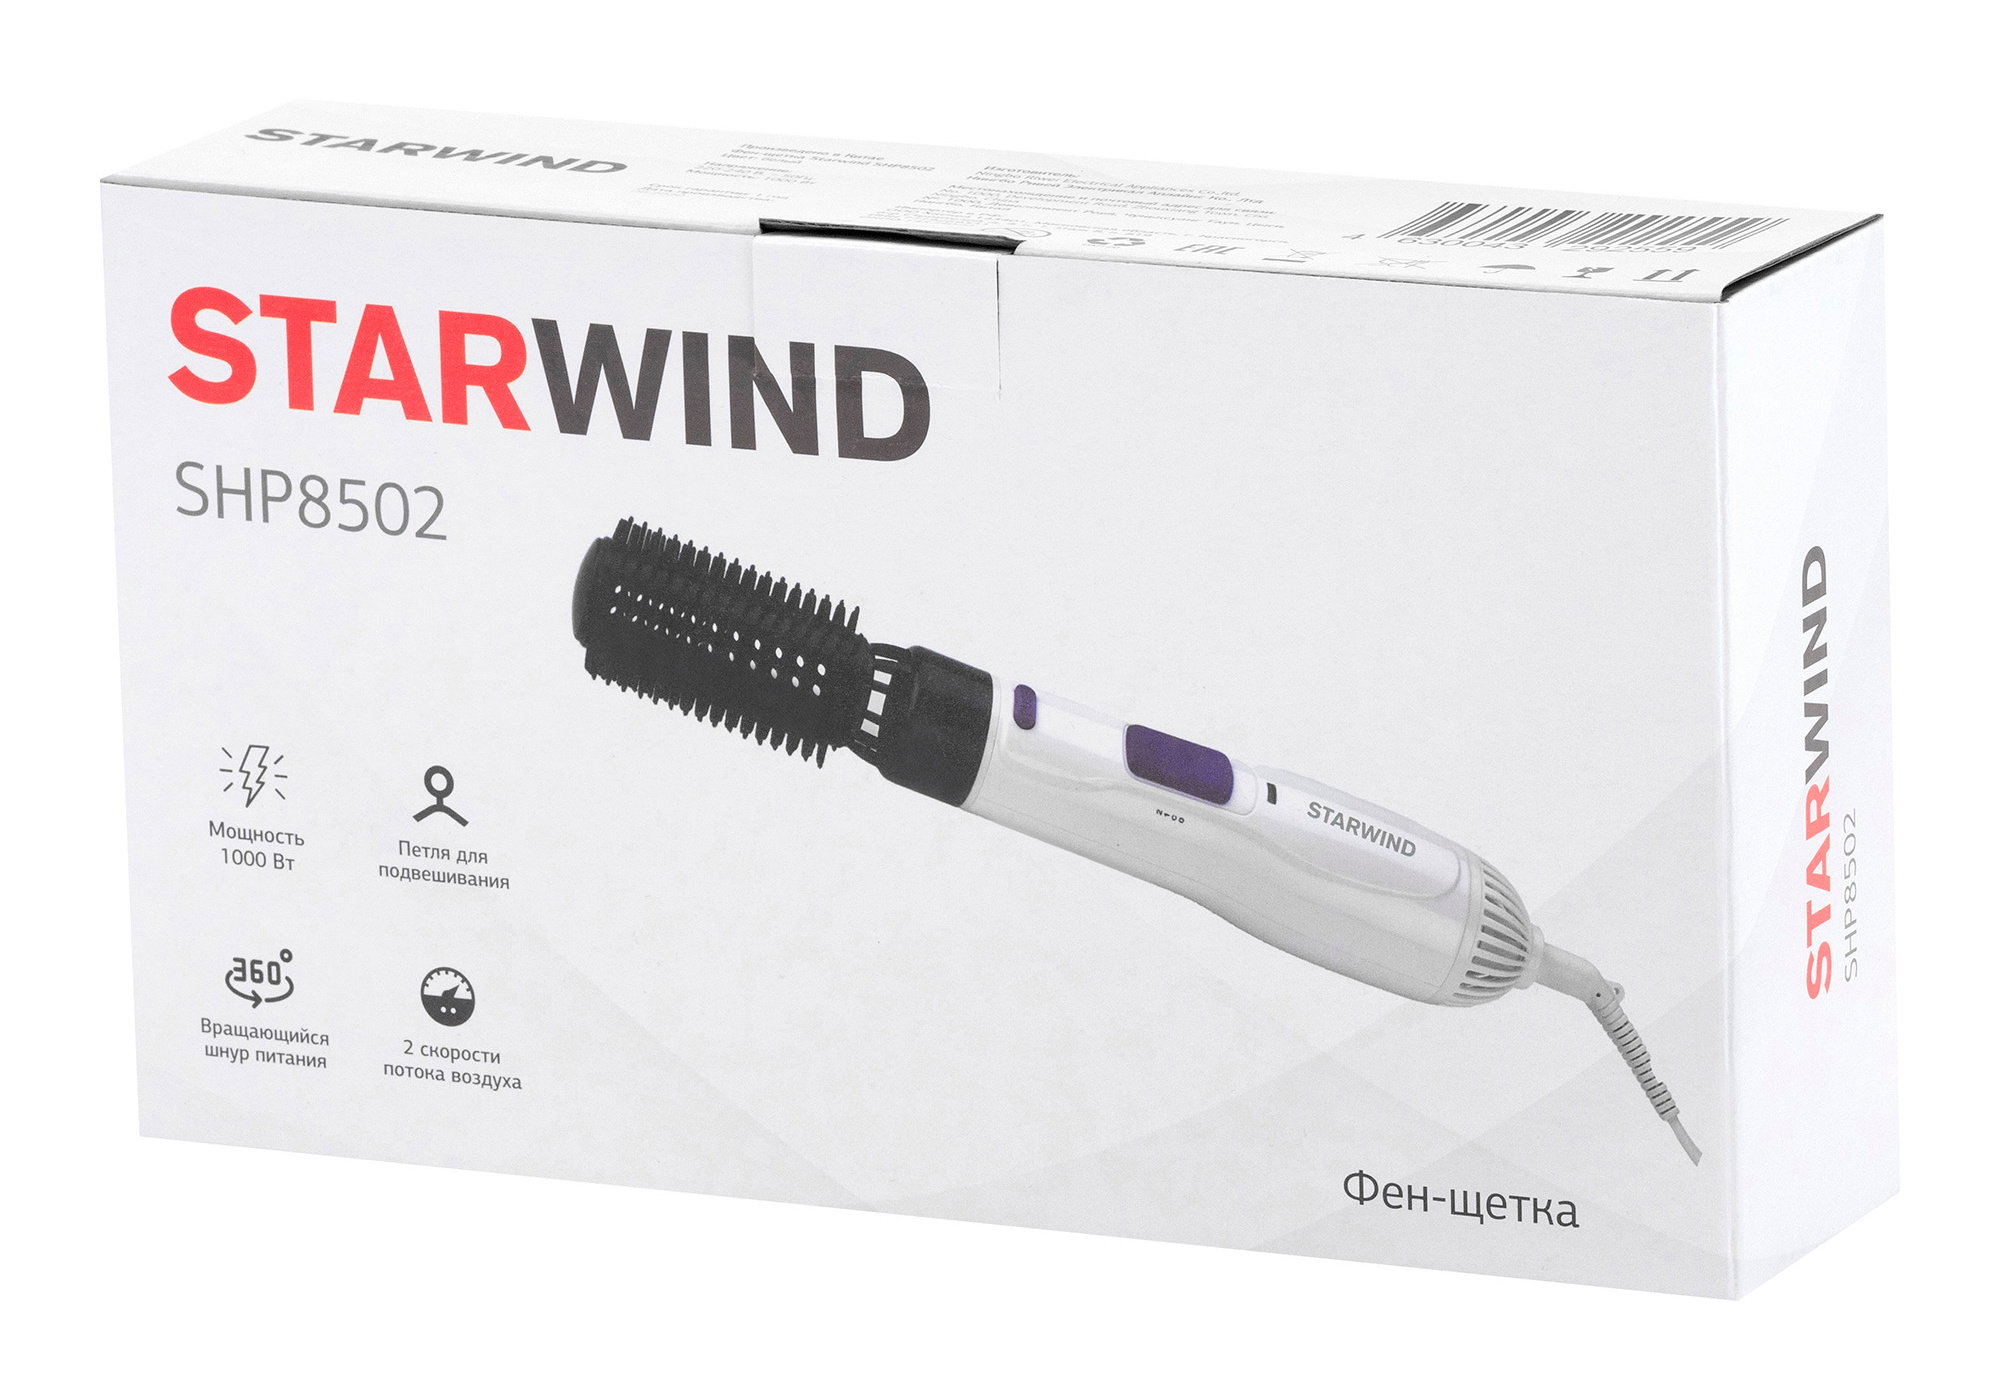 Фен-щетка Starwind SHP8502 белый/фиолетовый от магазина Старвинд